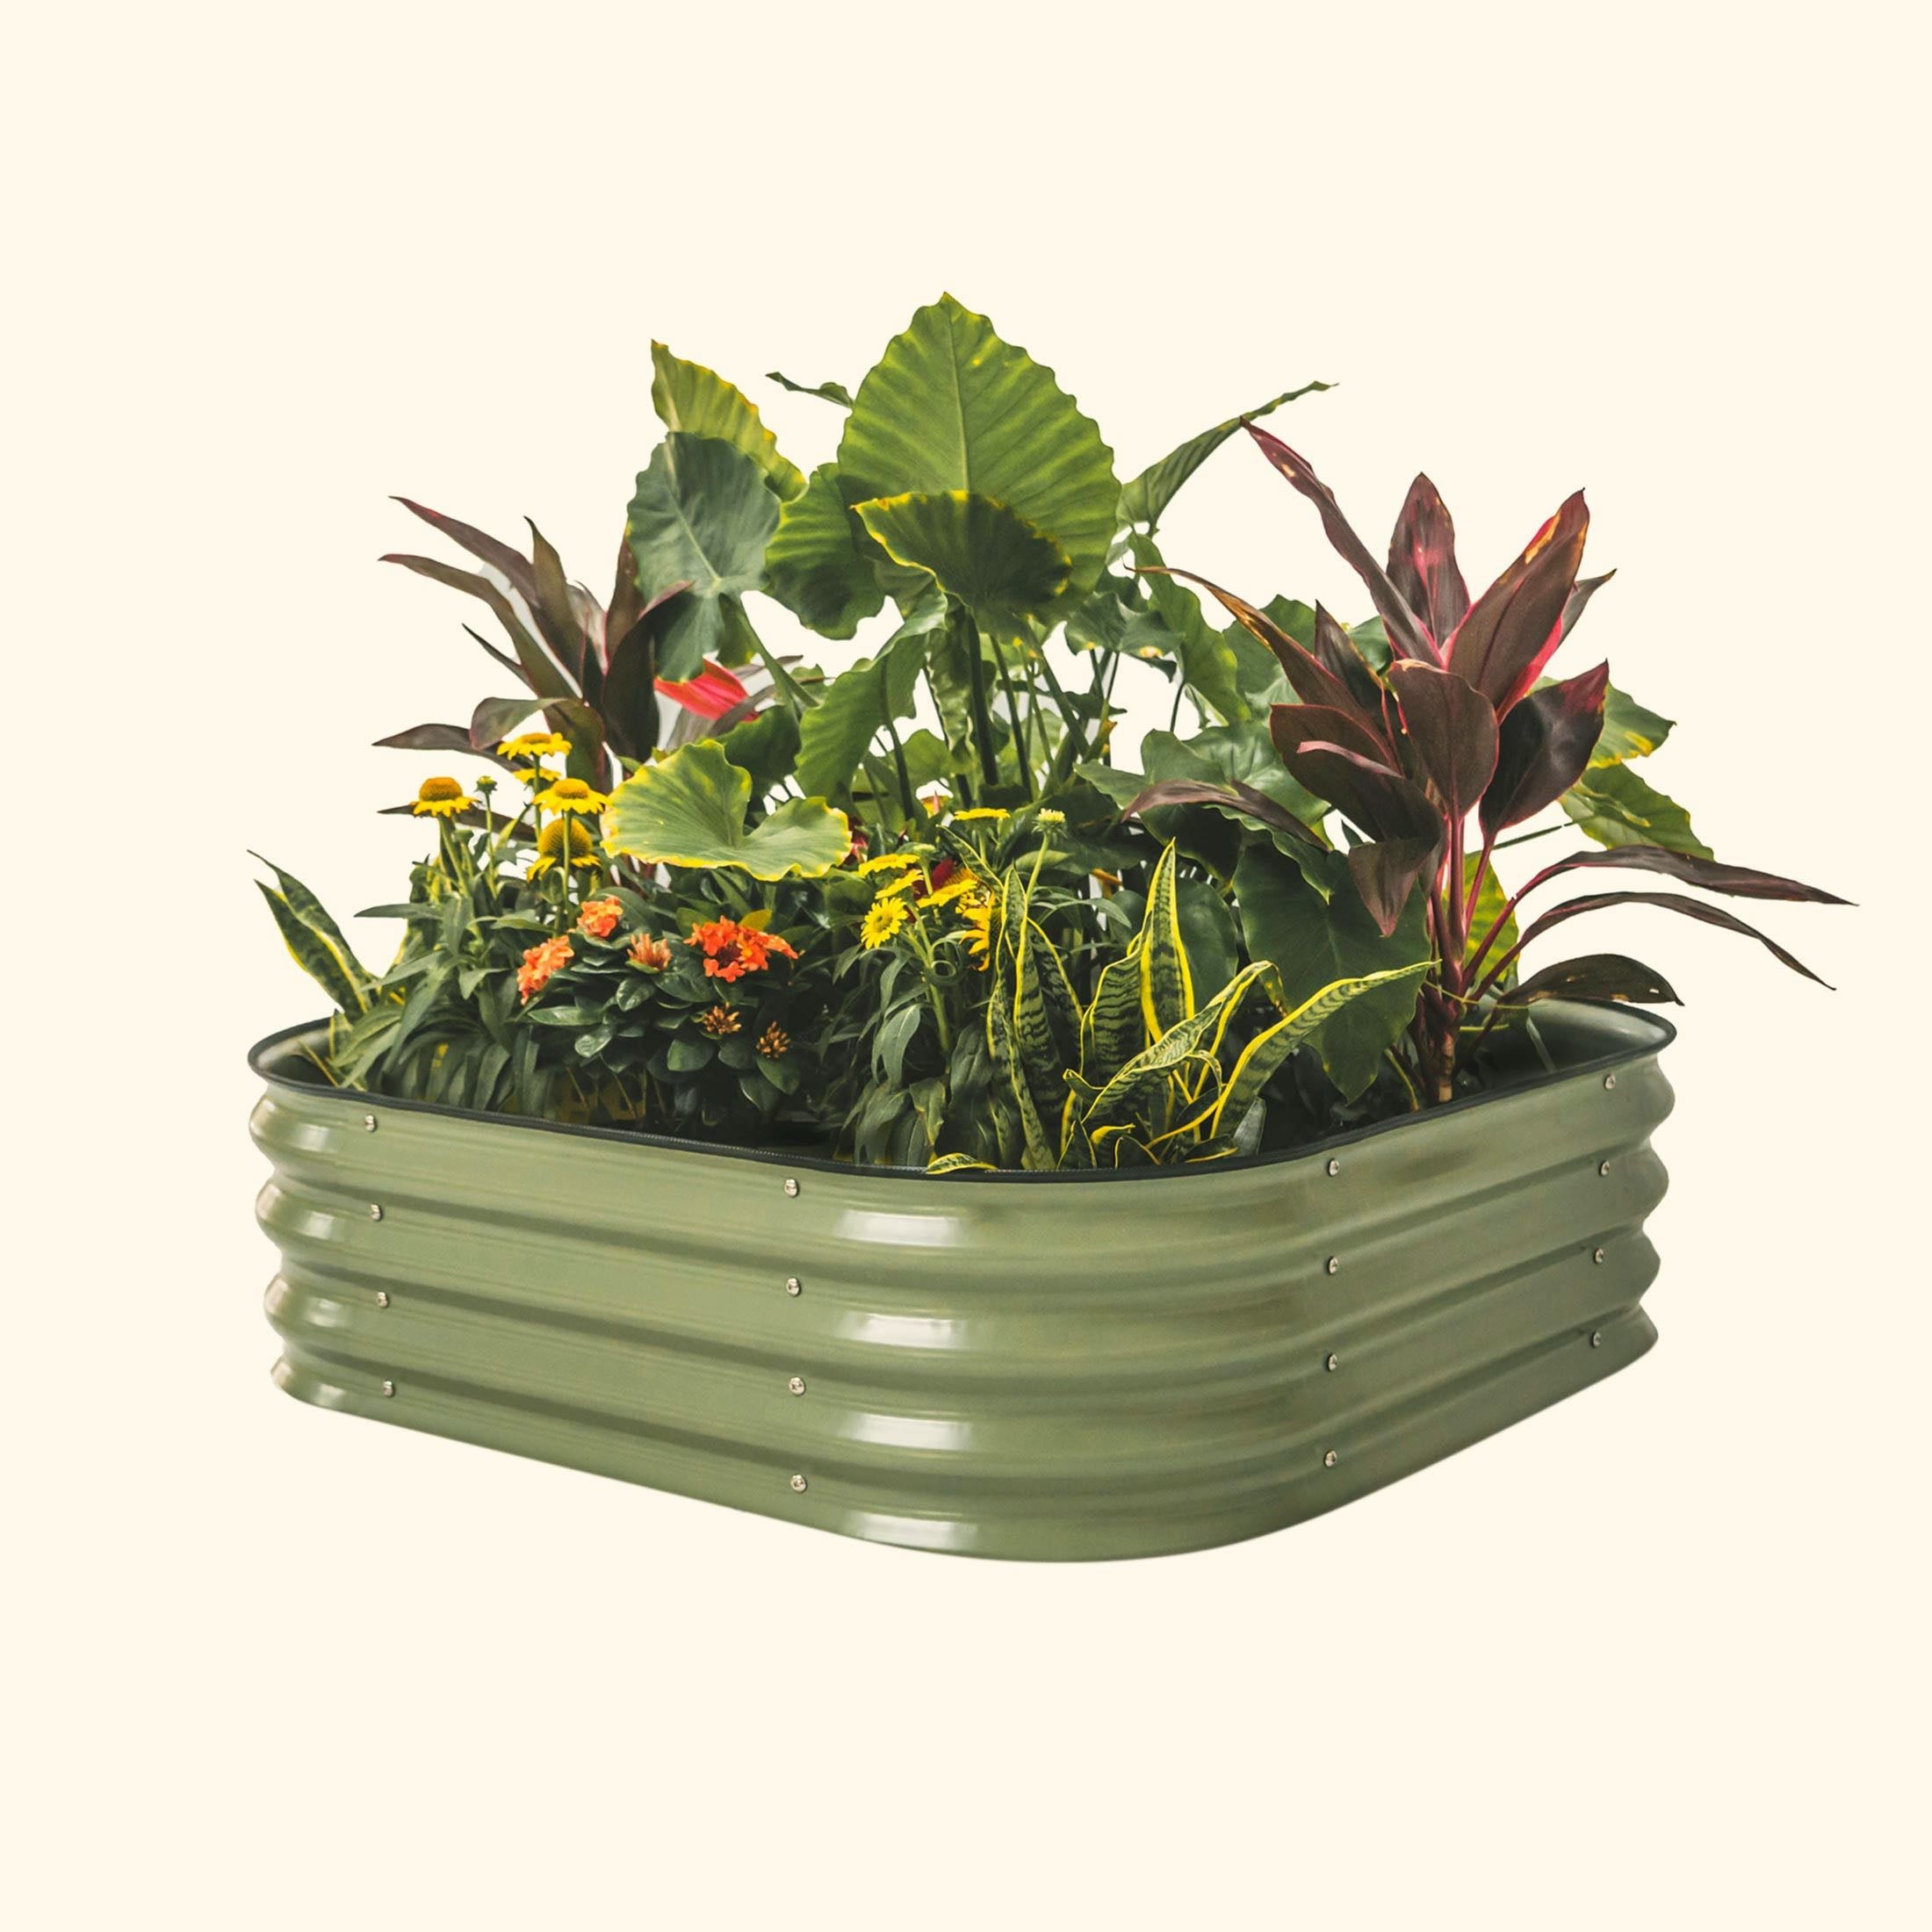 Vego Garden | 11" Tall 4 In 1 Modular Metal Raised Garden Bed Kit Olive Green